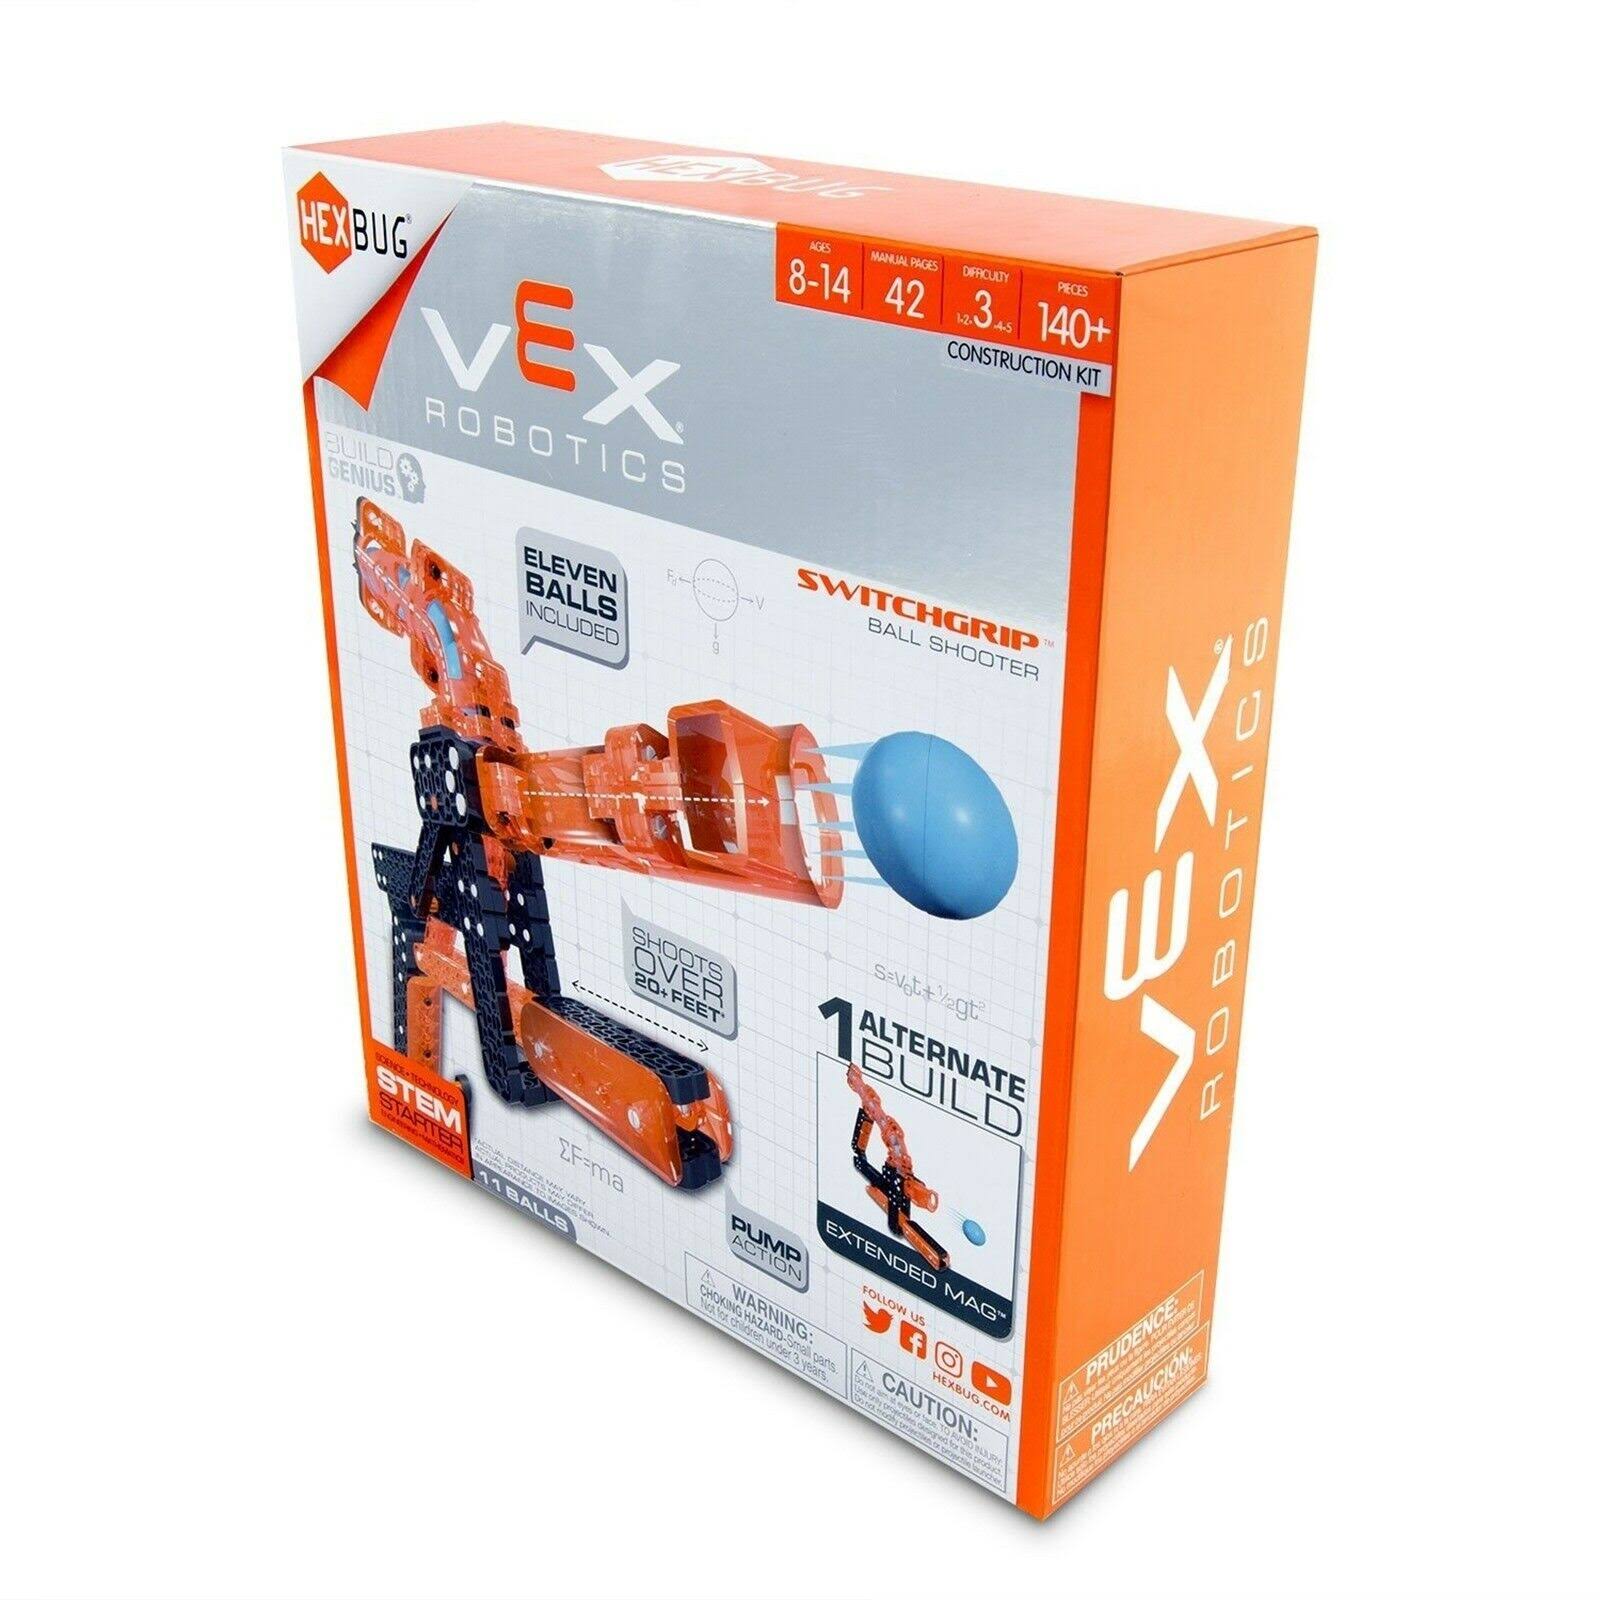 Hexbug VEX Robotics Switch Grip Ball Shooter Construction Kit